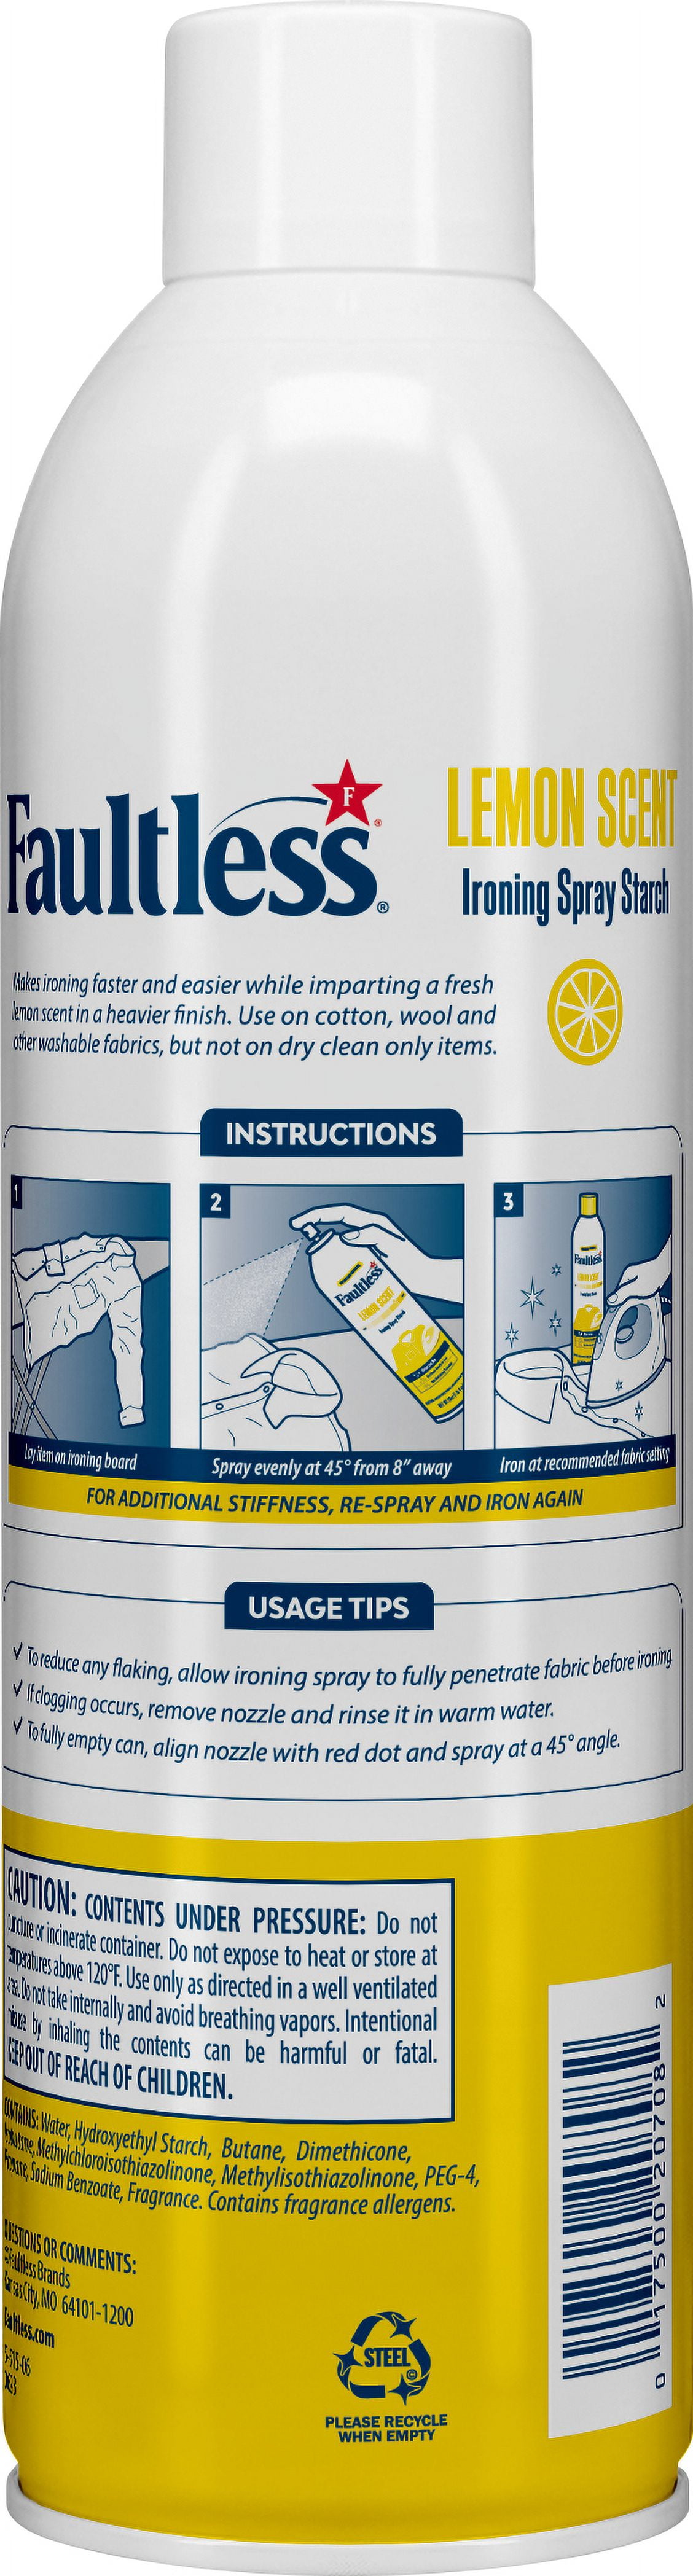 Buy Faultless Lemon Scent Ironing Spray Starch Fabric Stiffener